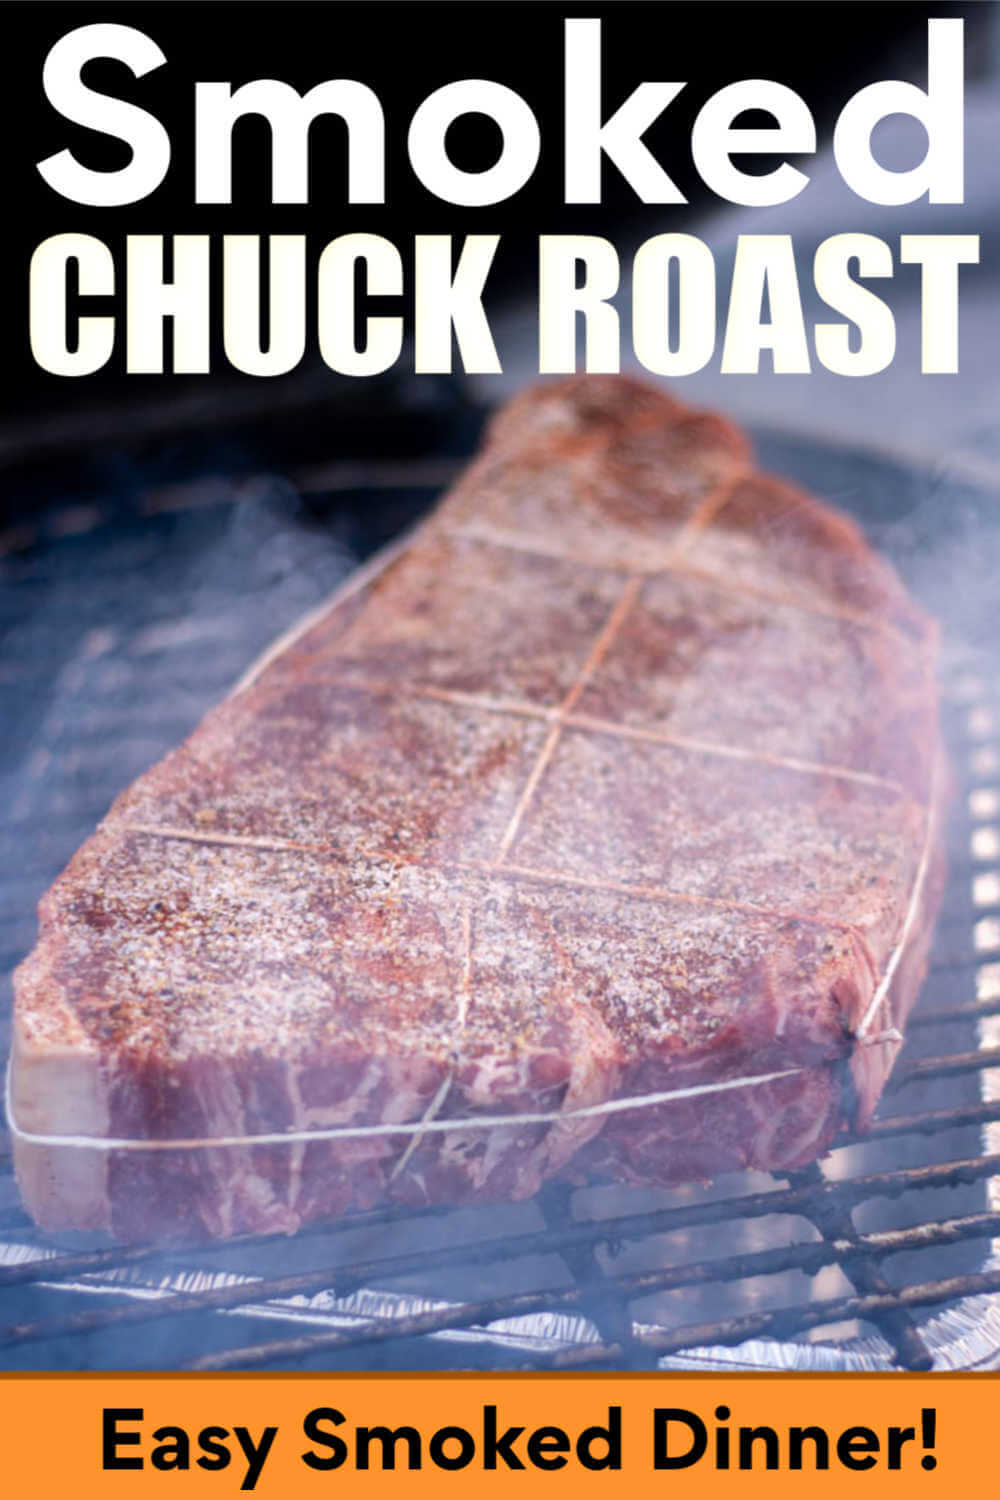 Smoked Chuck Roast with Homemade Rub